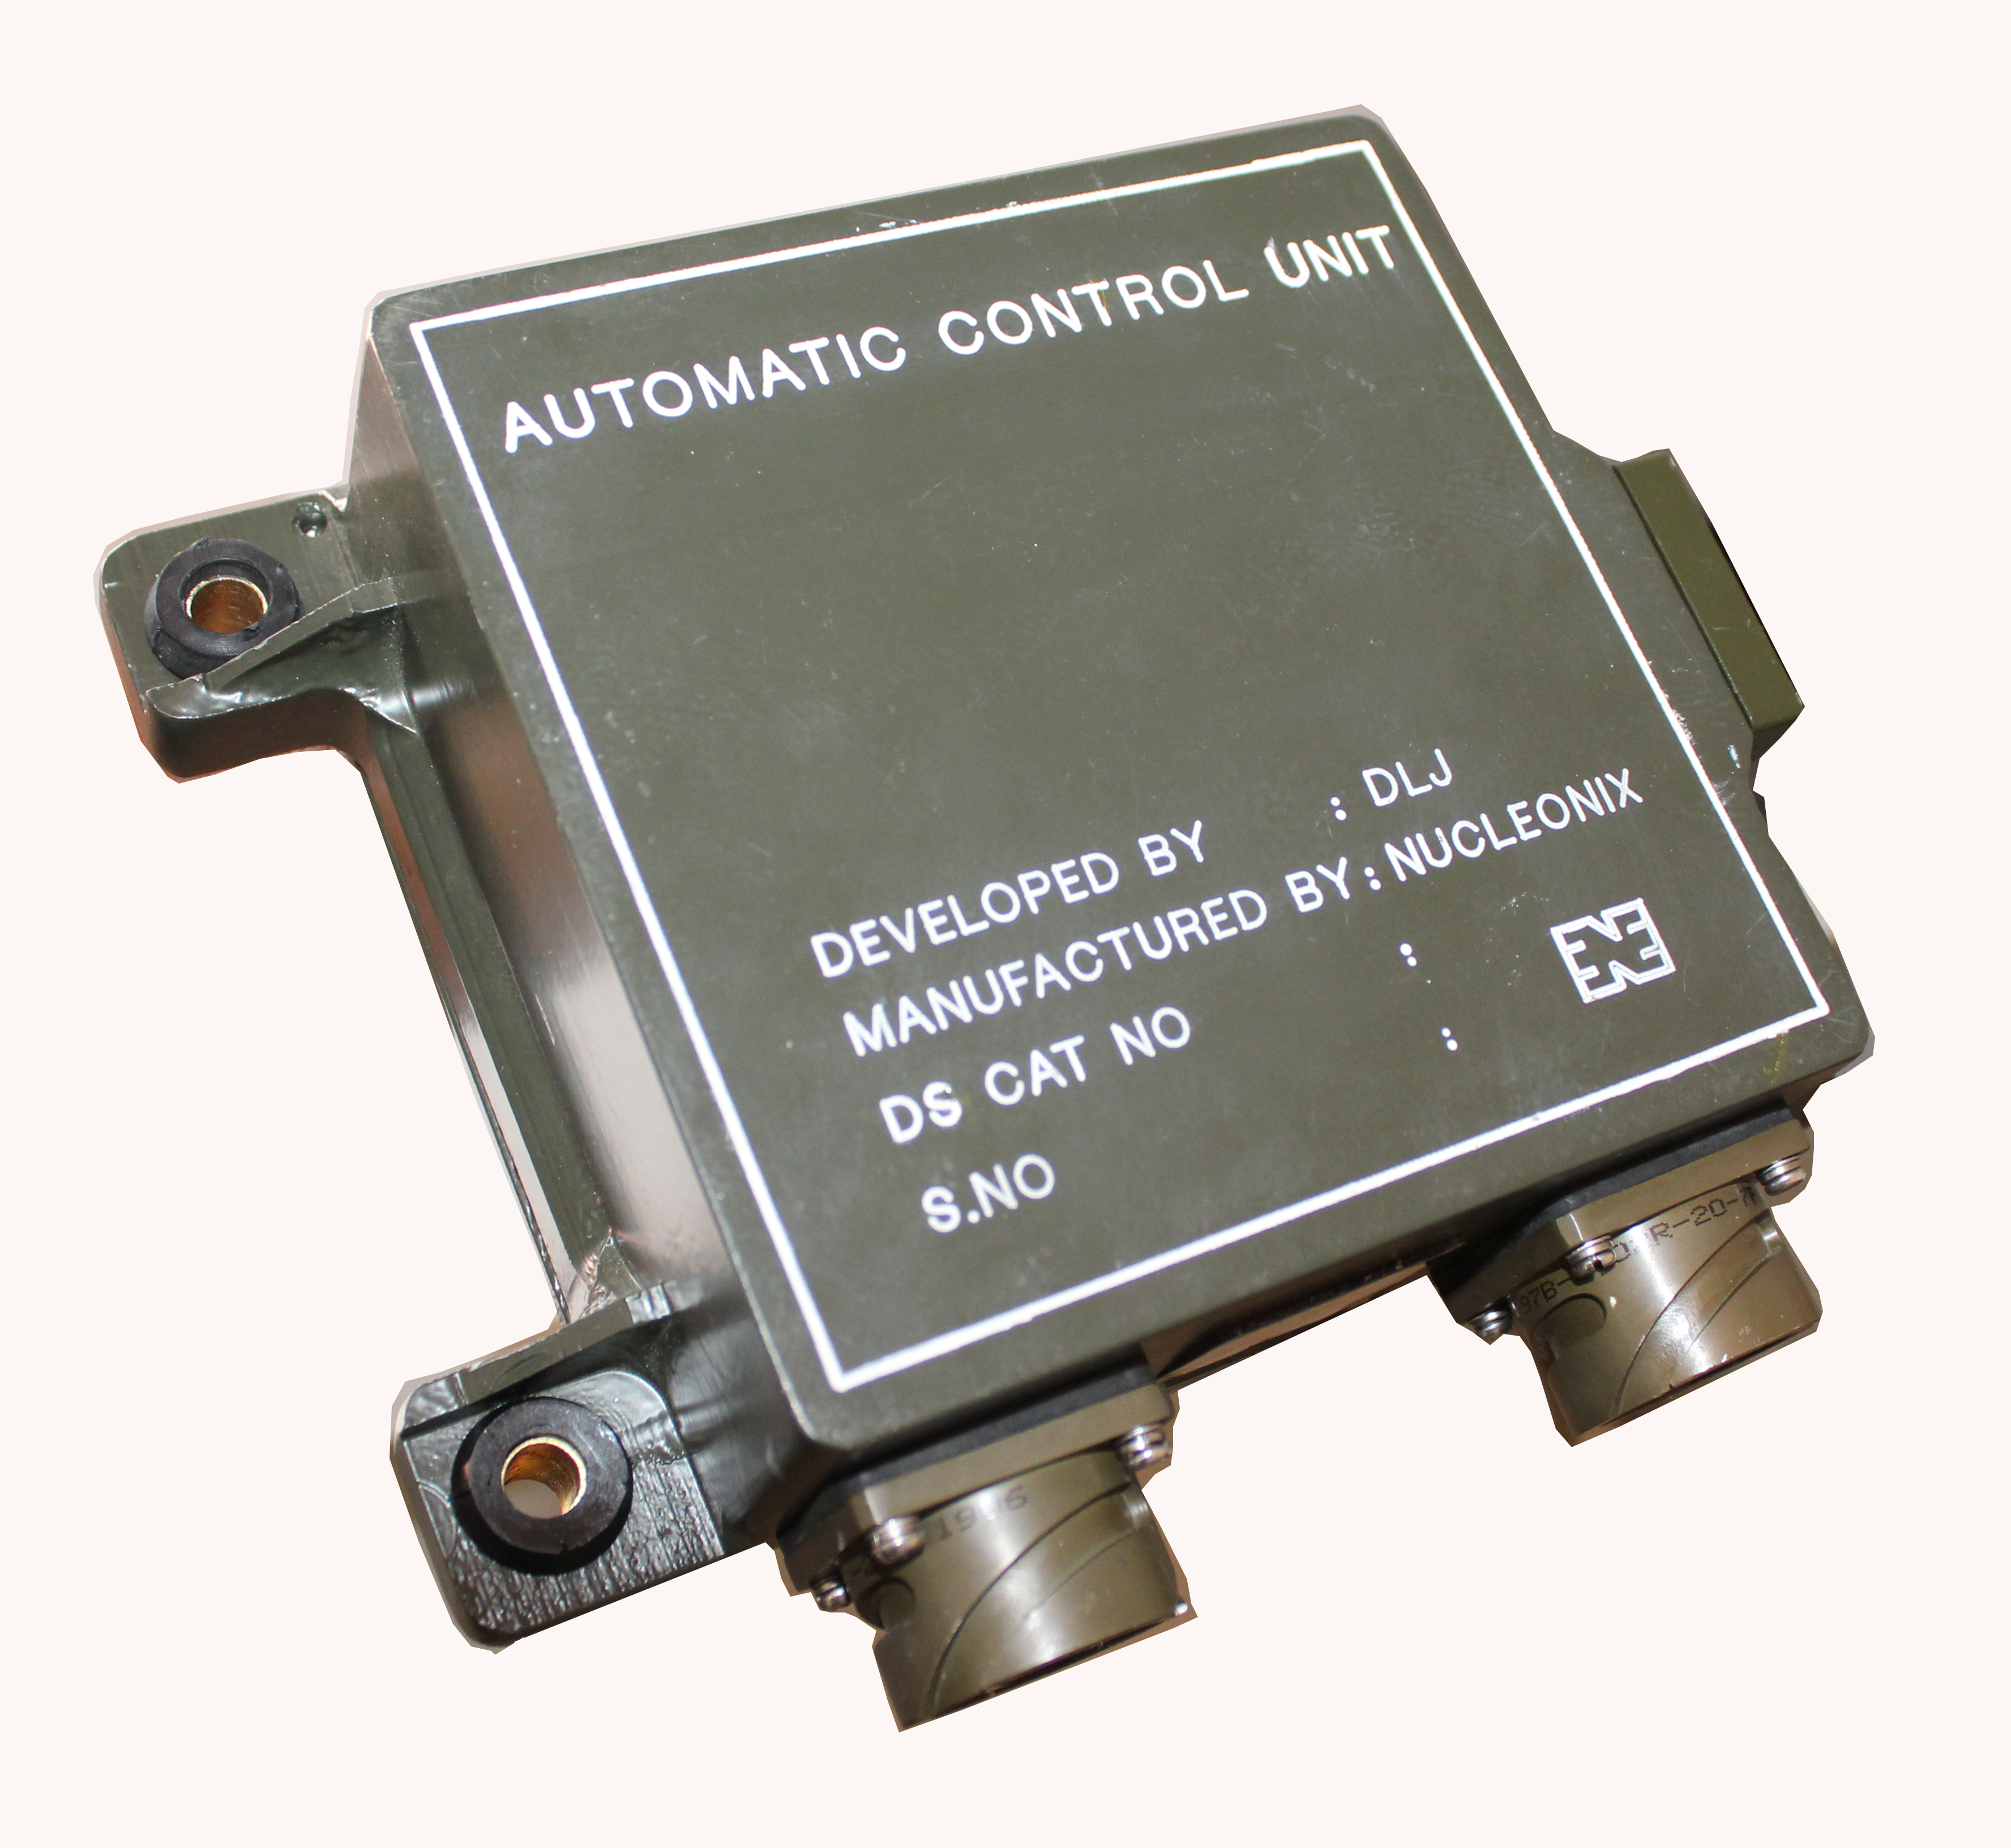 Automatic Control Unit